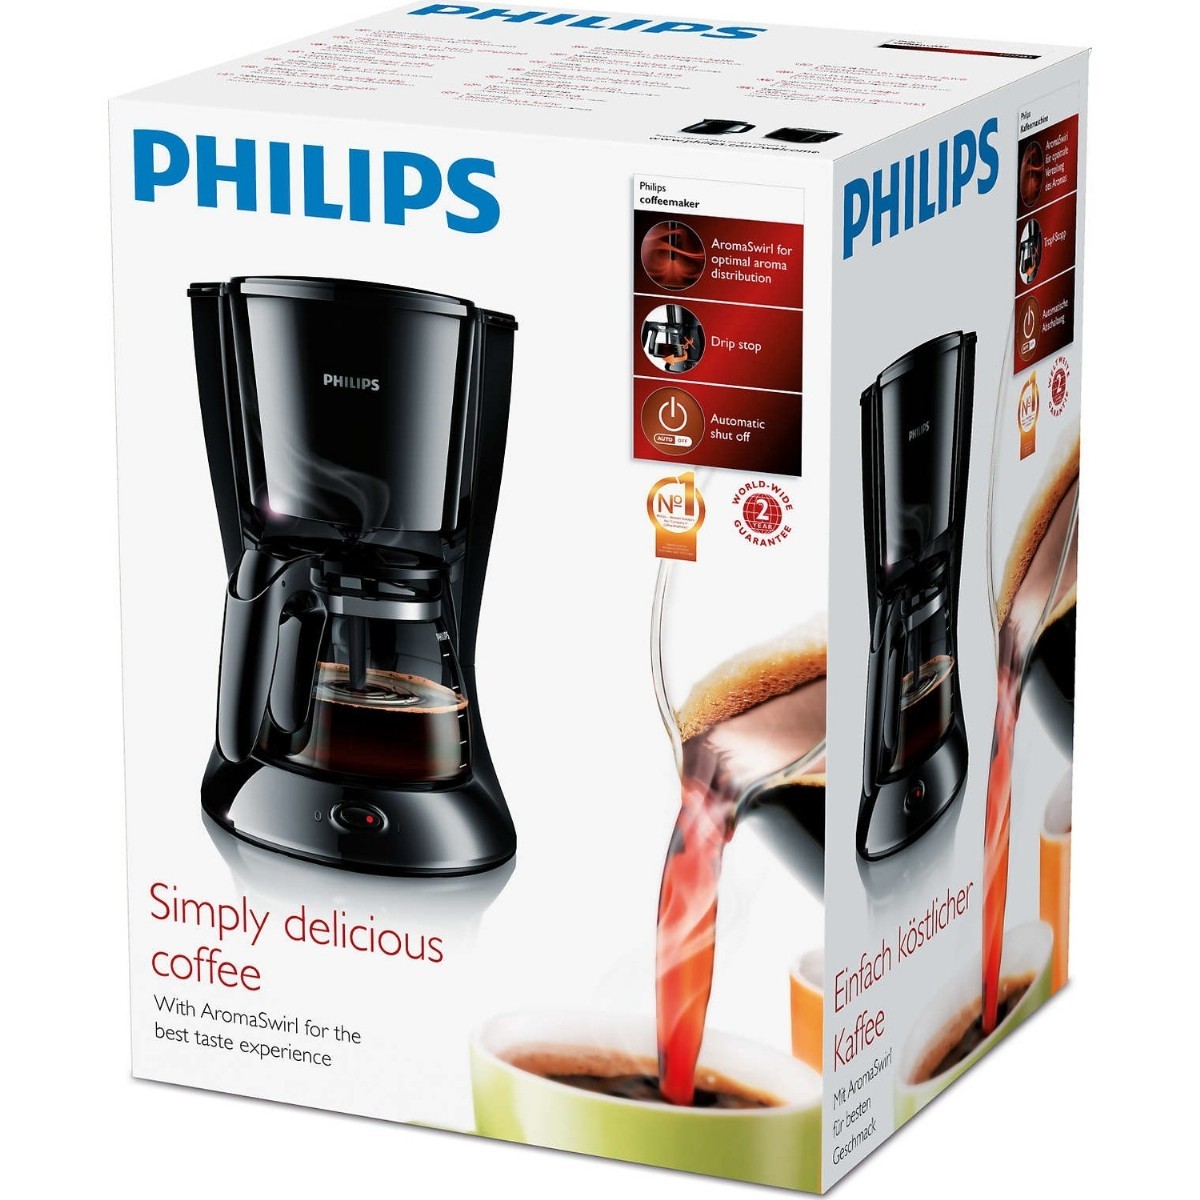 Filtre Kahve Makinesi | Philips HD7461/20 Daily Collection Siyah Filtre Kahve Makinesi | HD7461/20 | Philips HD7461/20 Daily Collection Siyah Filtre Kahve Makinesi, Philips 7461 filtre kahve makinesi fiyat, philps 7461 ucuz | 